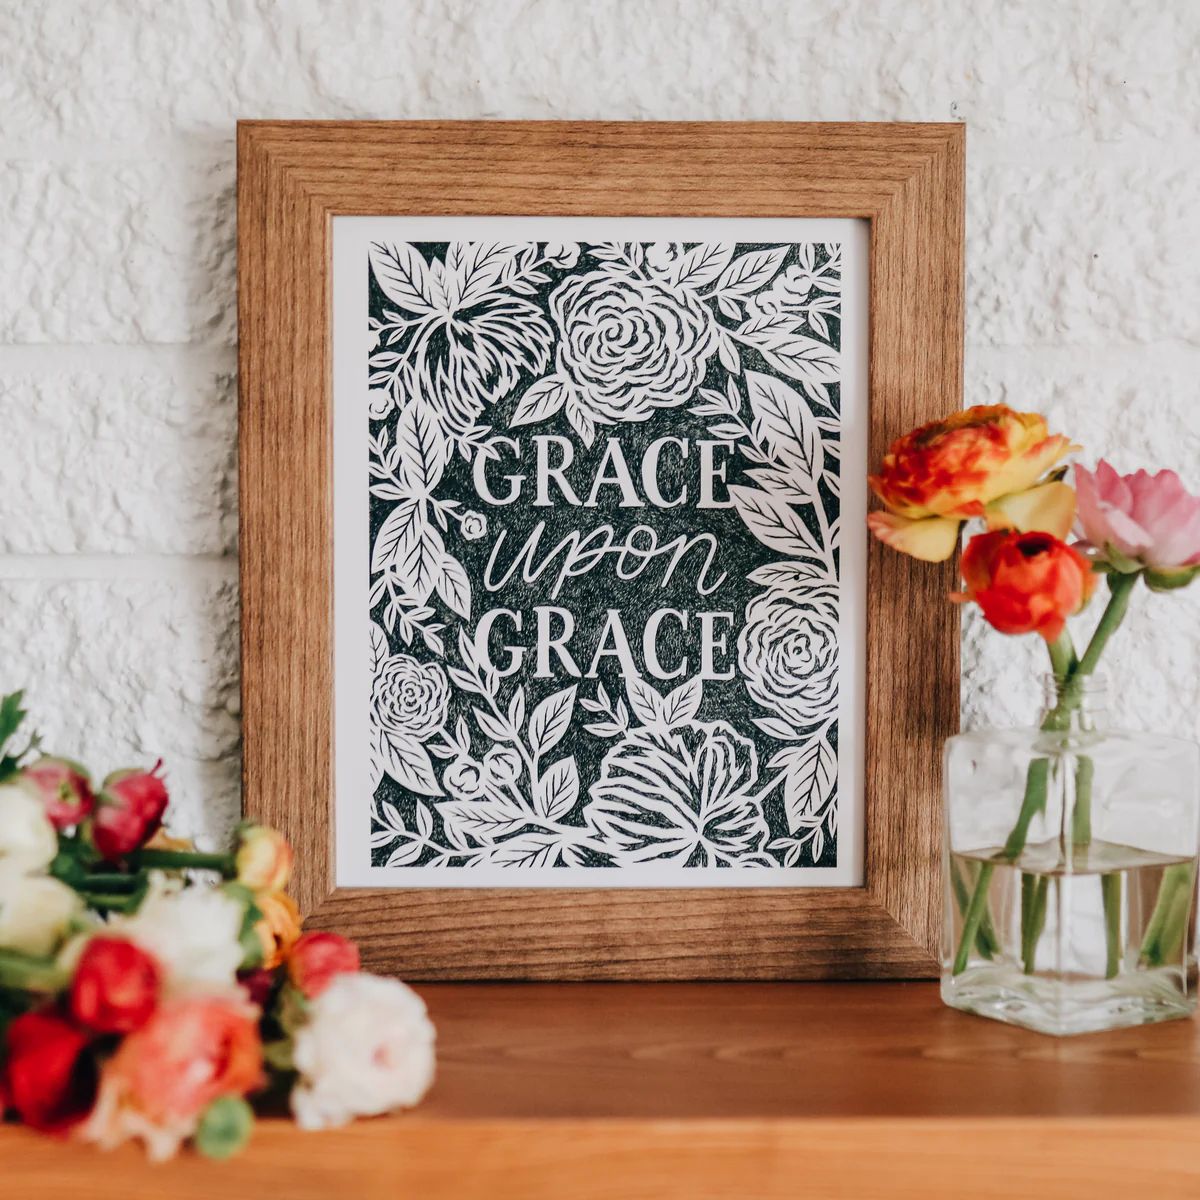 Grace Upon Grace Print | The Daily Grace Co.